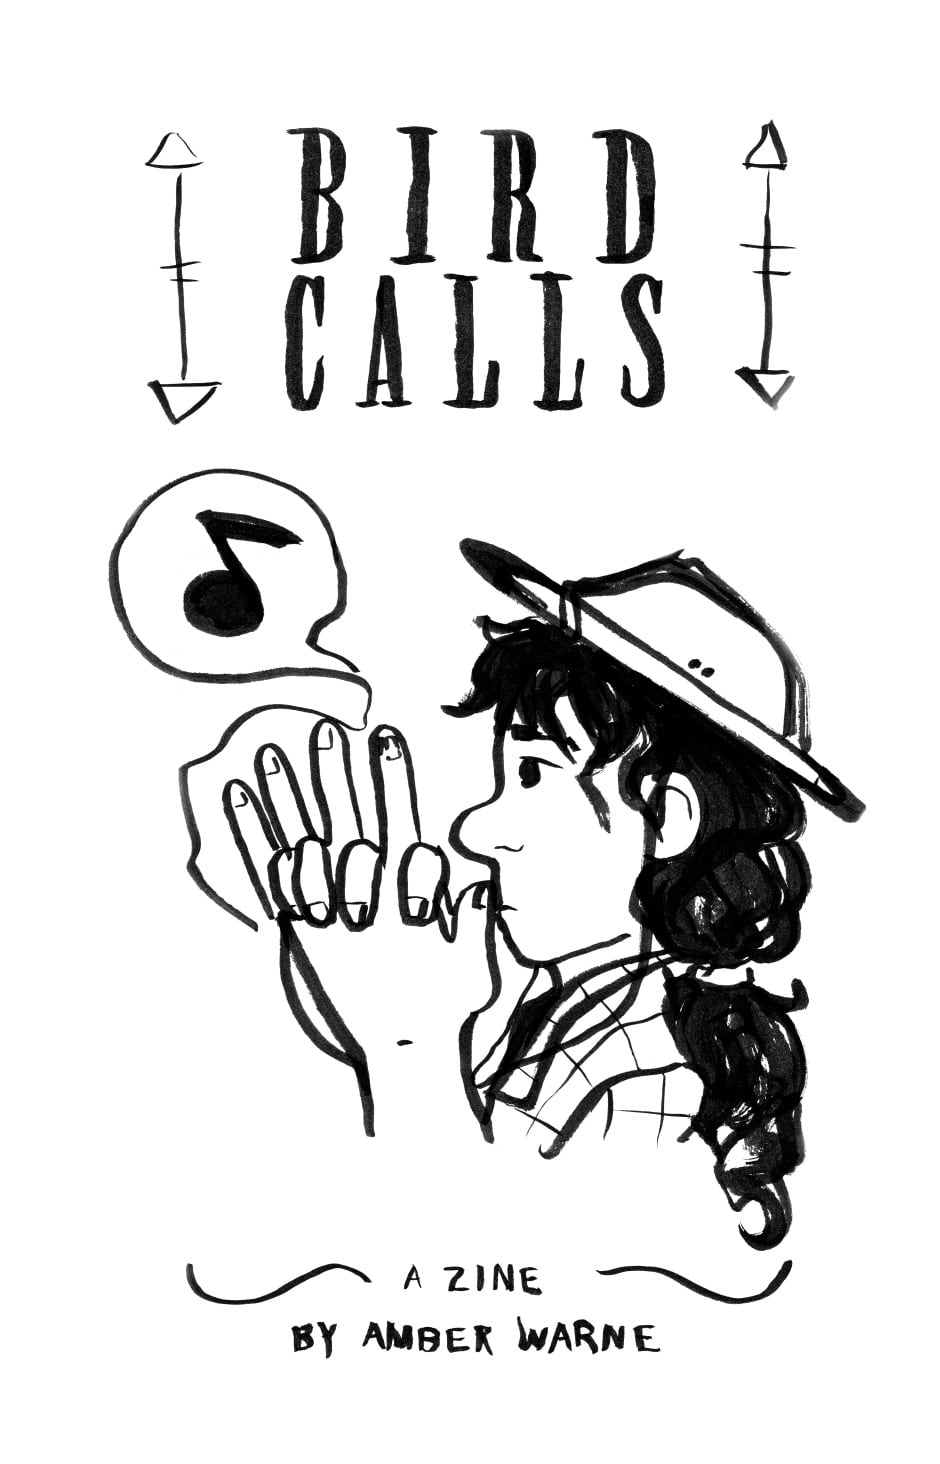 read-bird-calls-bird-calls-tapas-comics